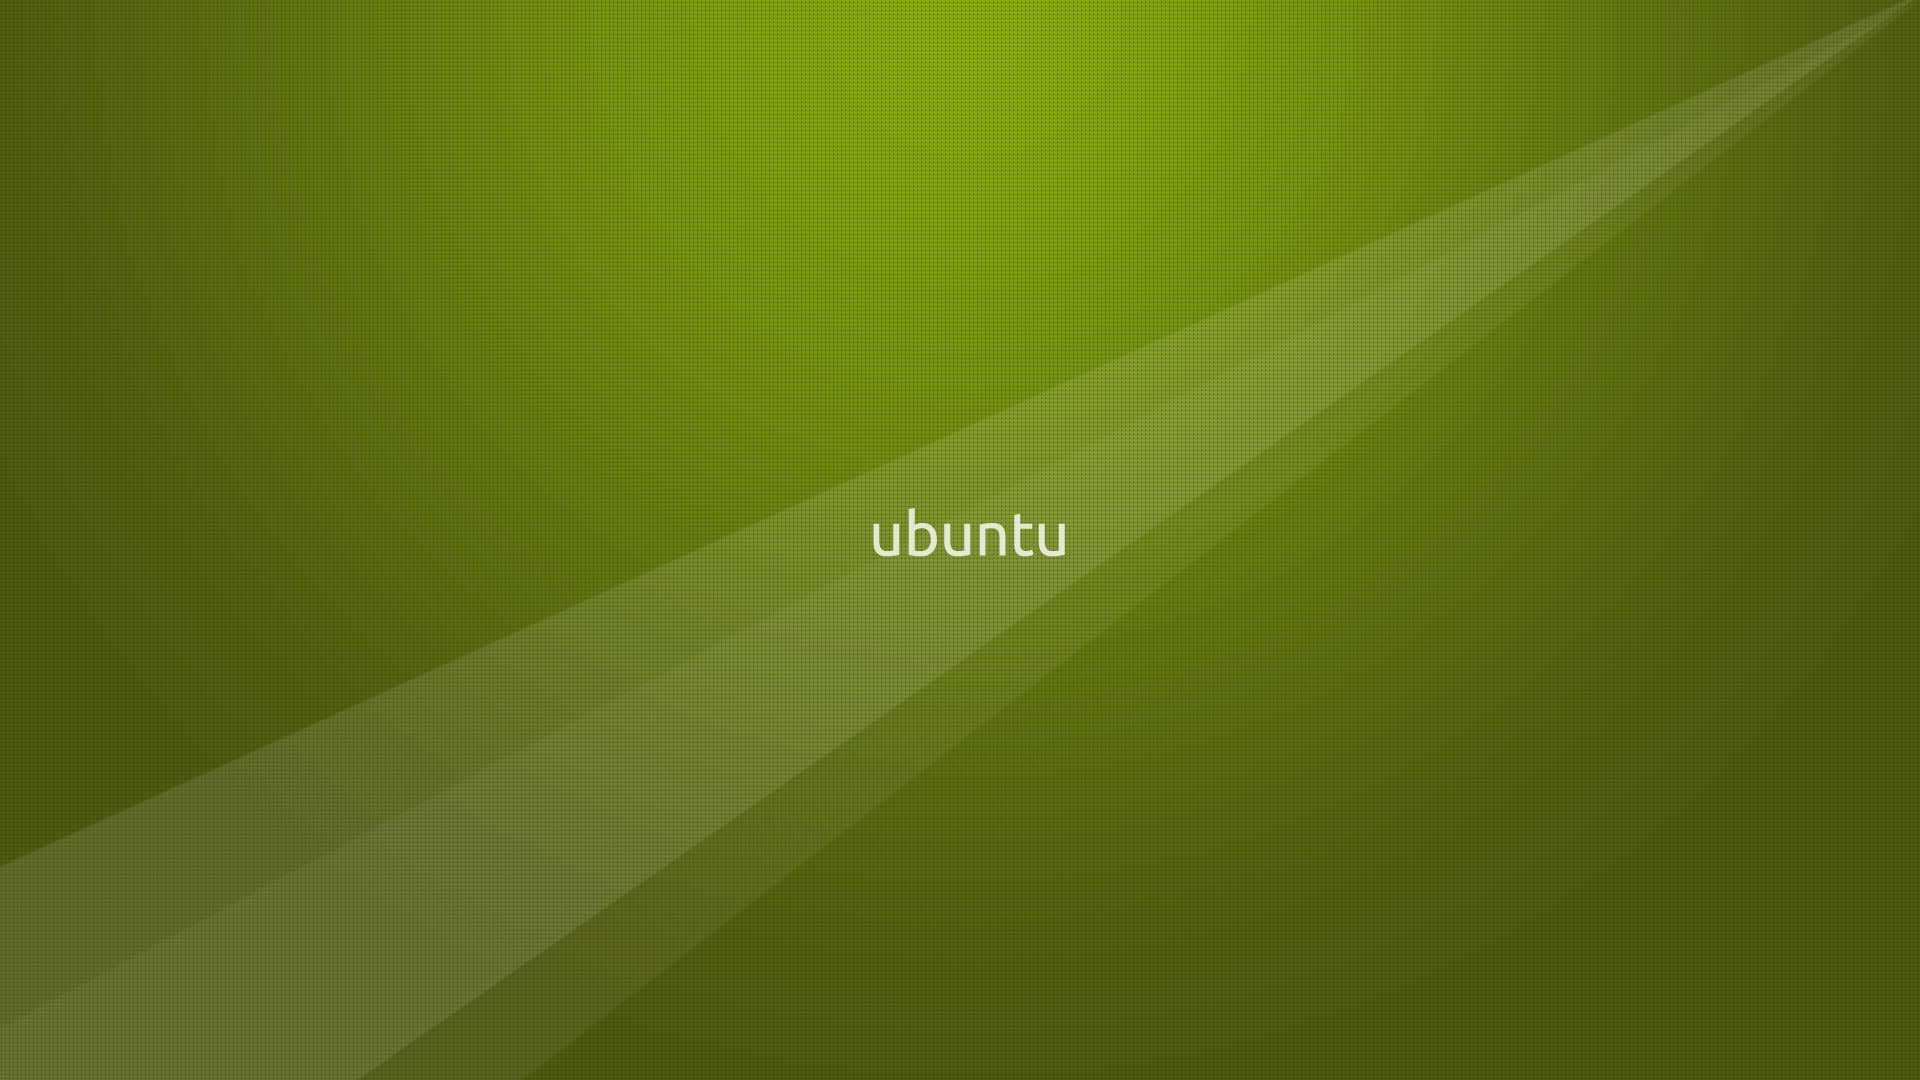 HD wallpaper, Green, Wallpaper, Ubuntu